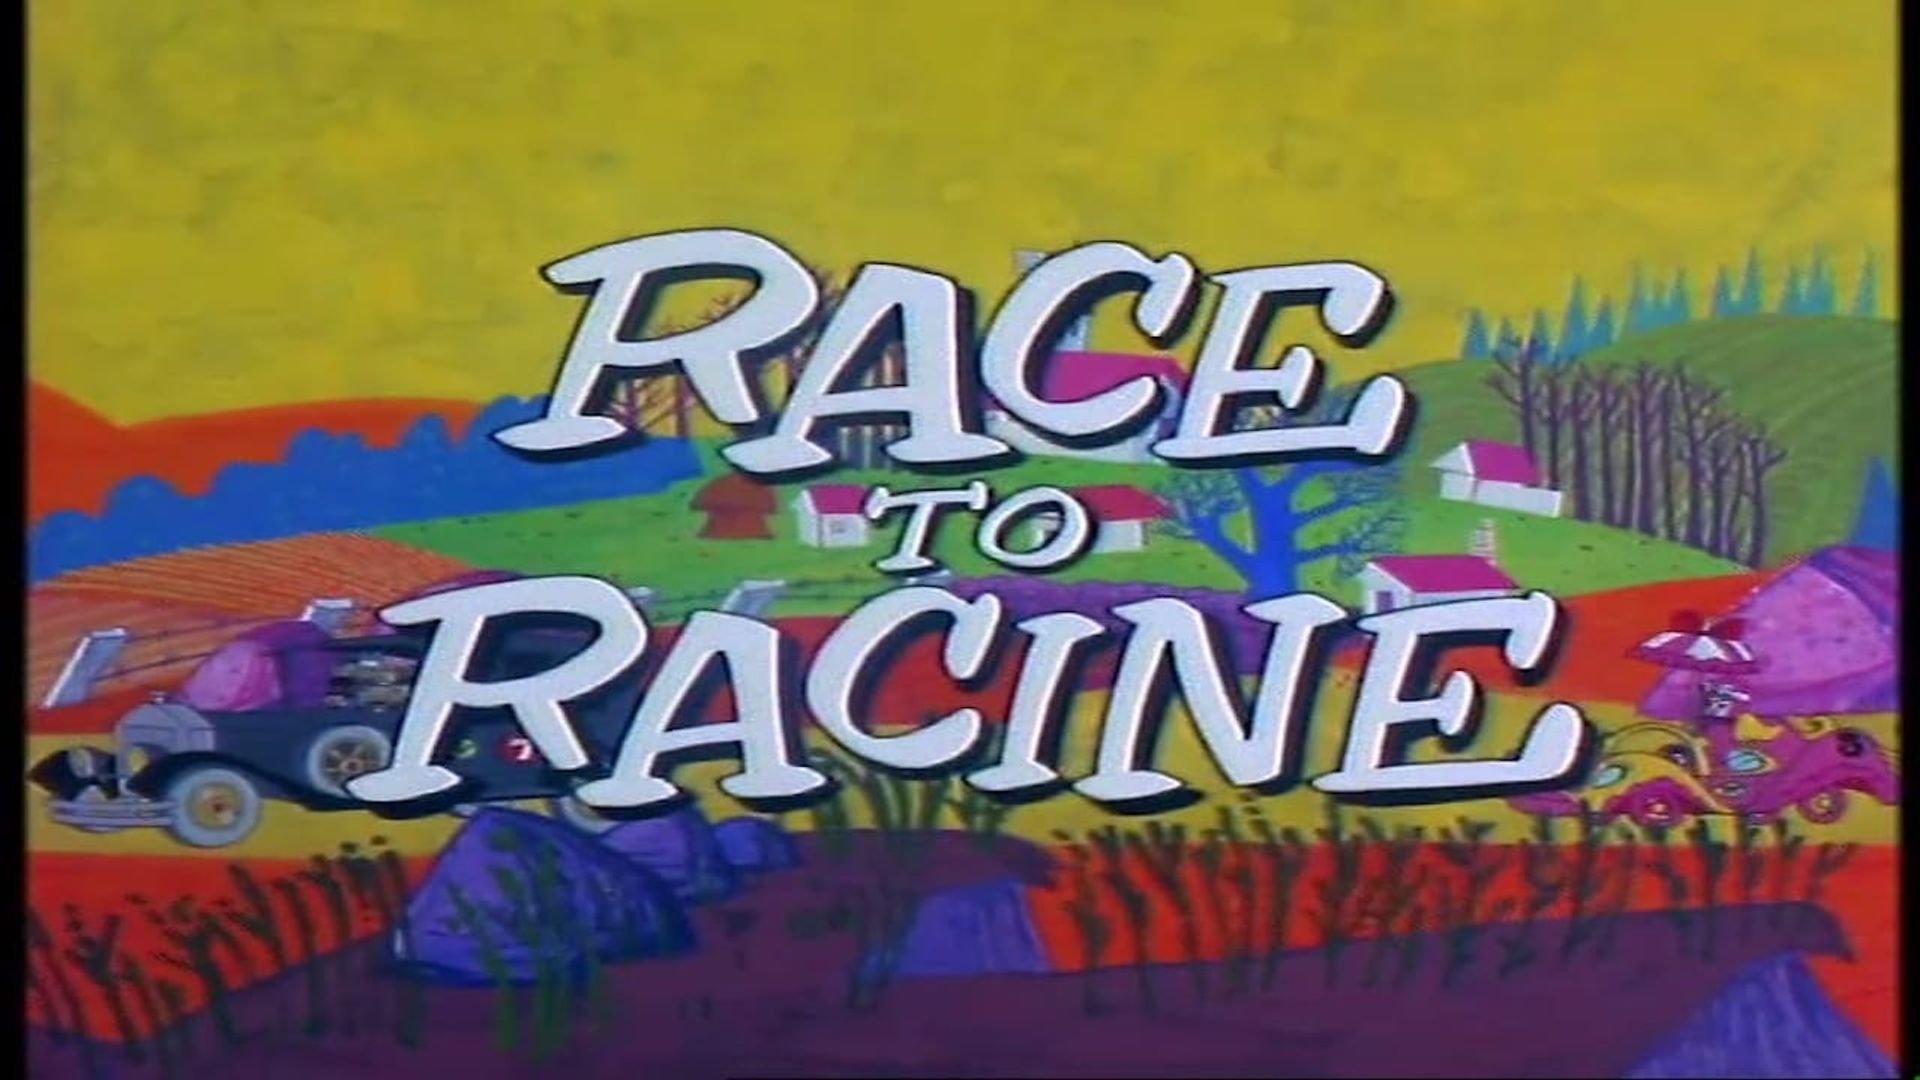 Wacky Races background